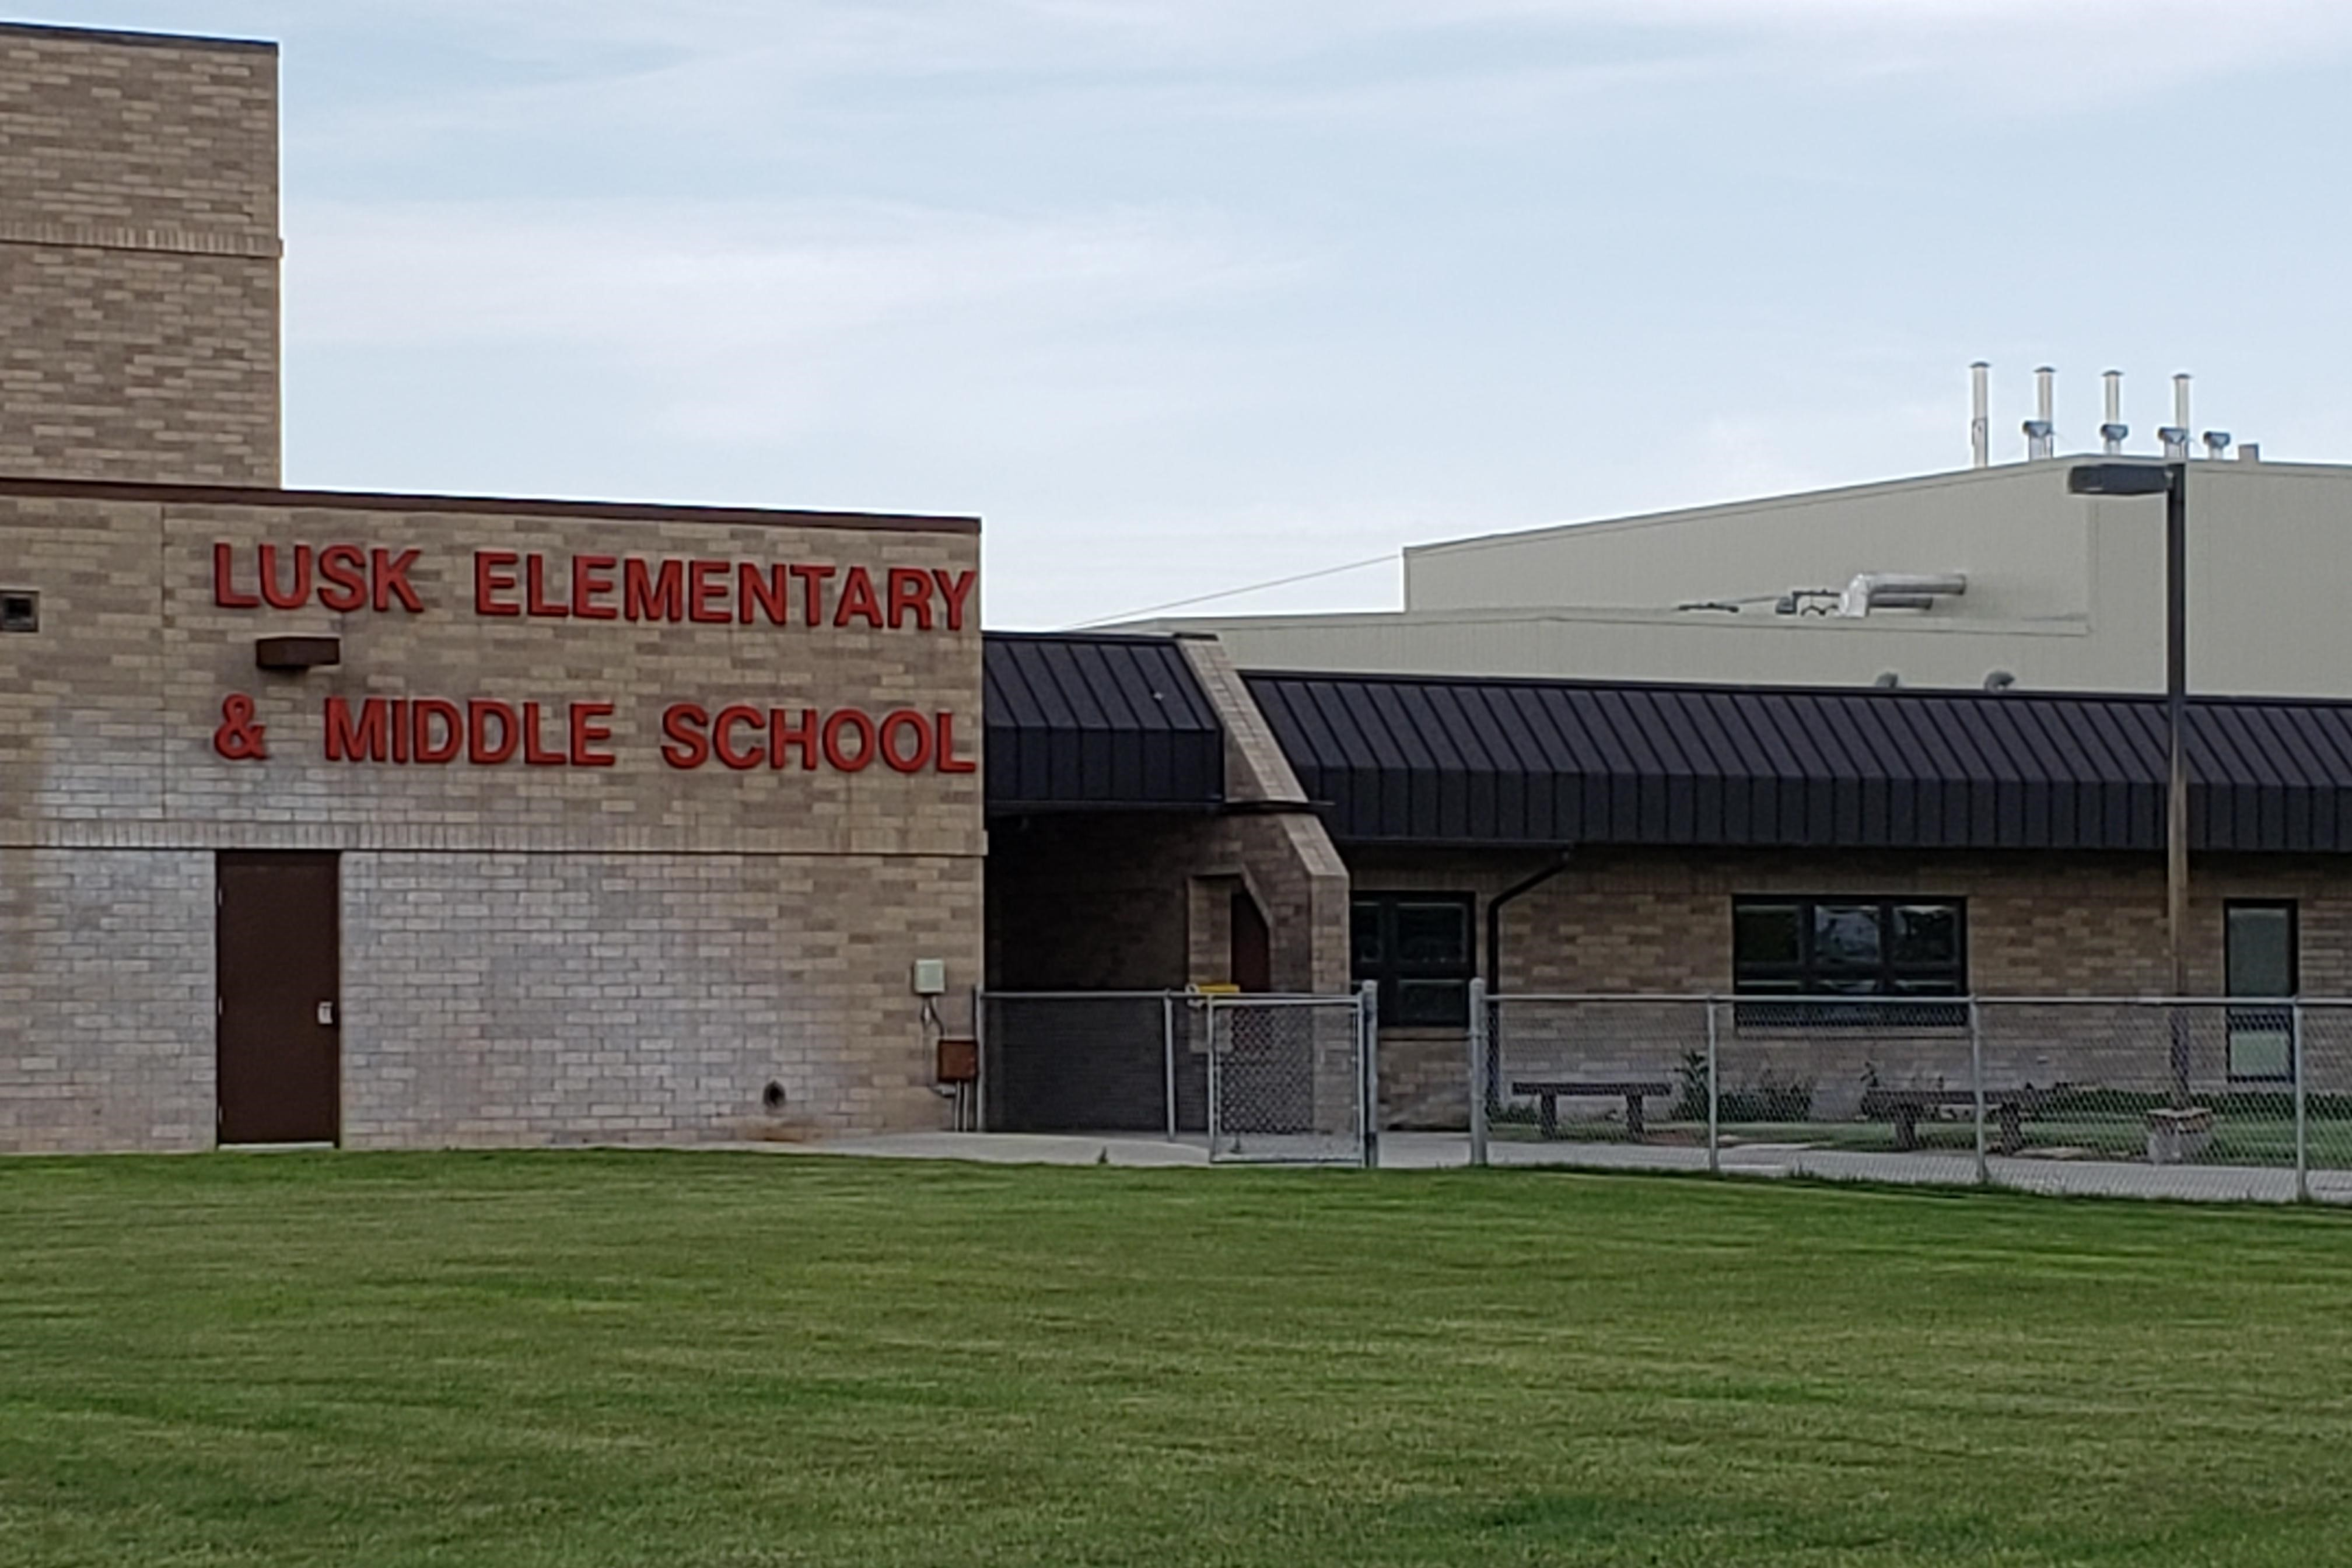 Lusk Elementary/Middle School